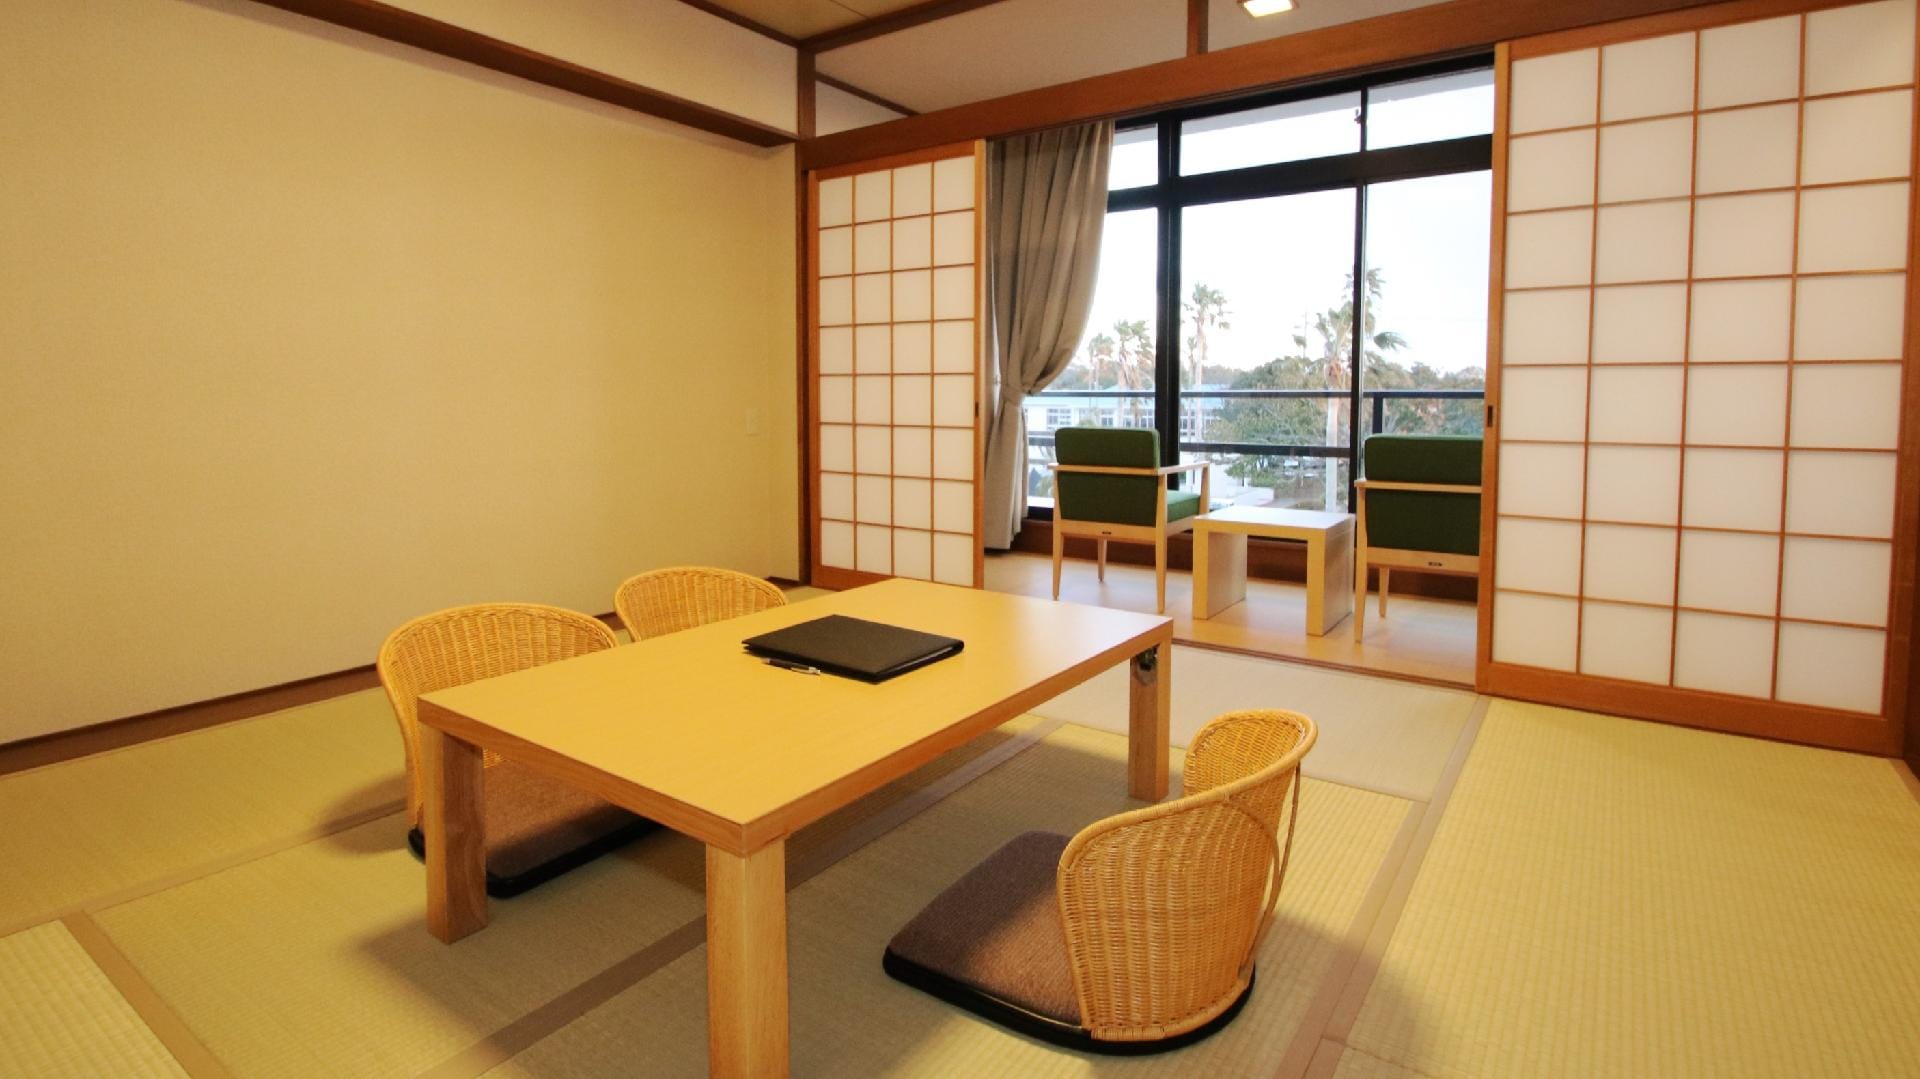 Garden view / Japanese-style room interior